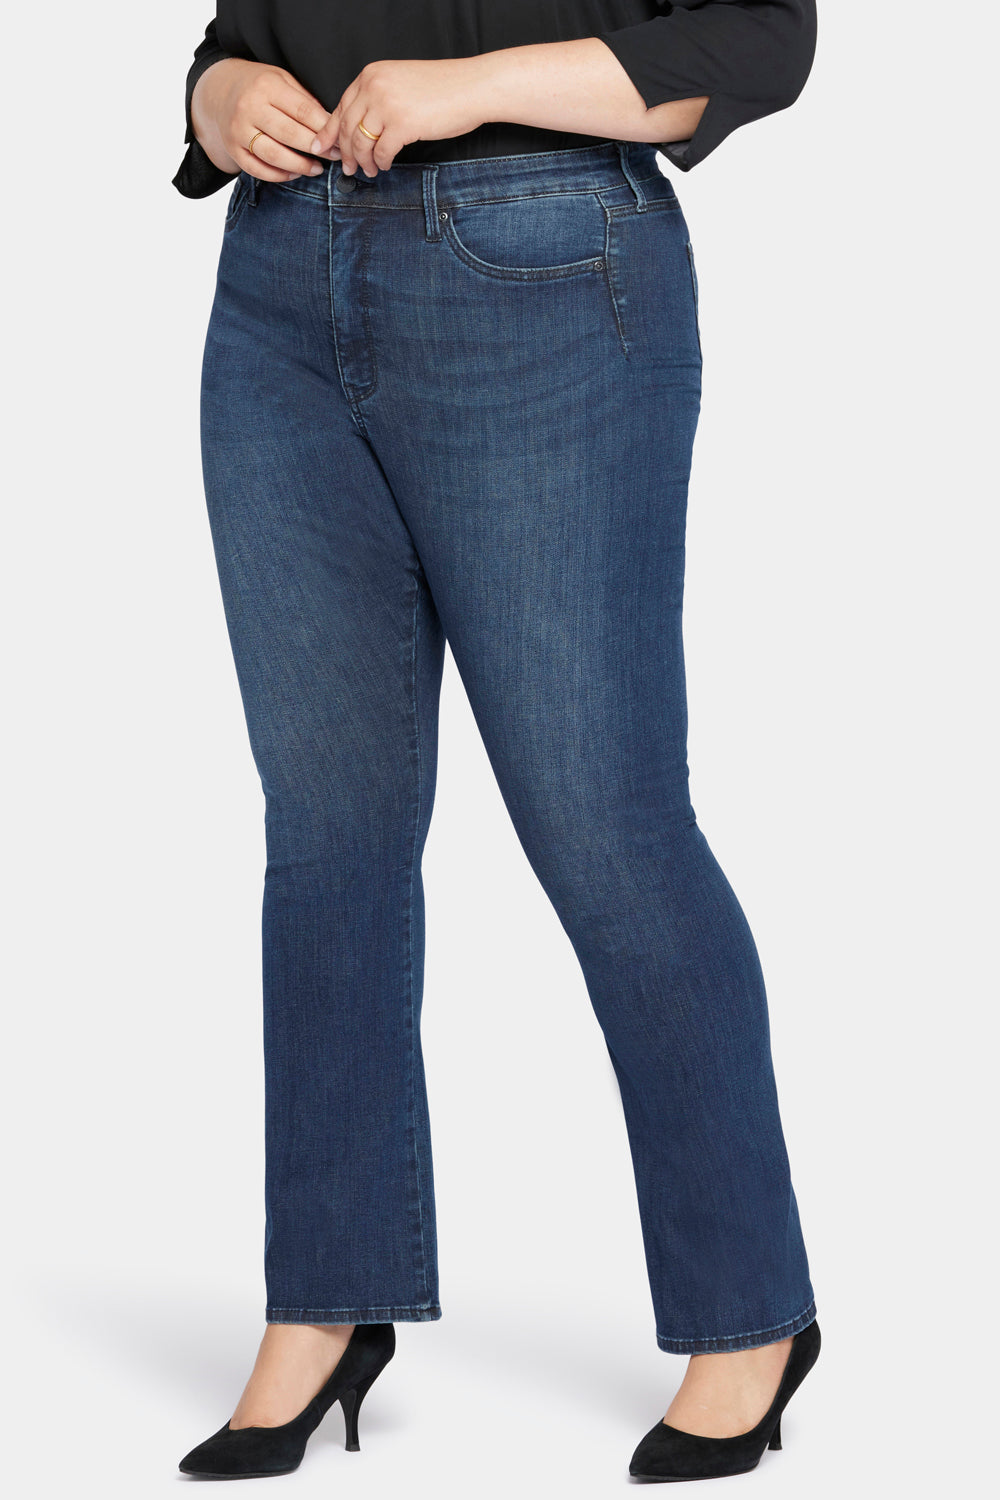 Le Silhouette Slim Bootcut Jeans In Long Inseam Plus Size - Precious